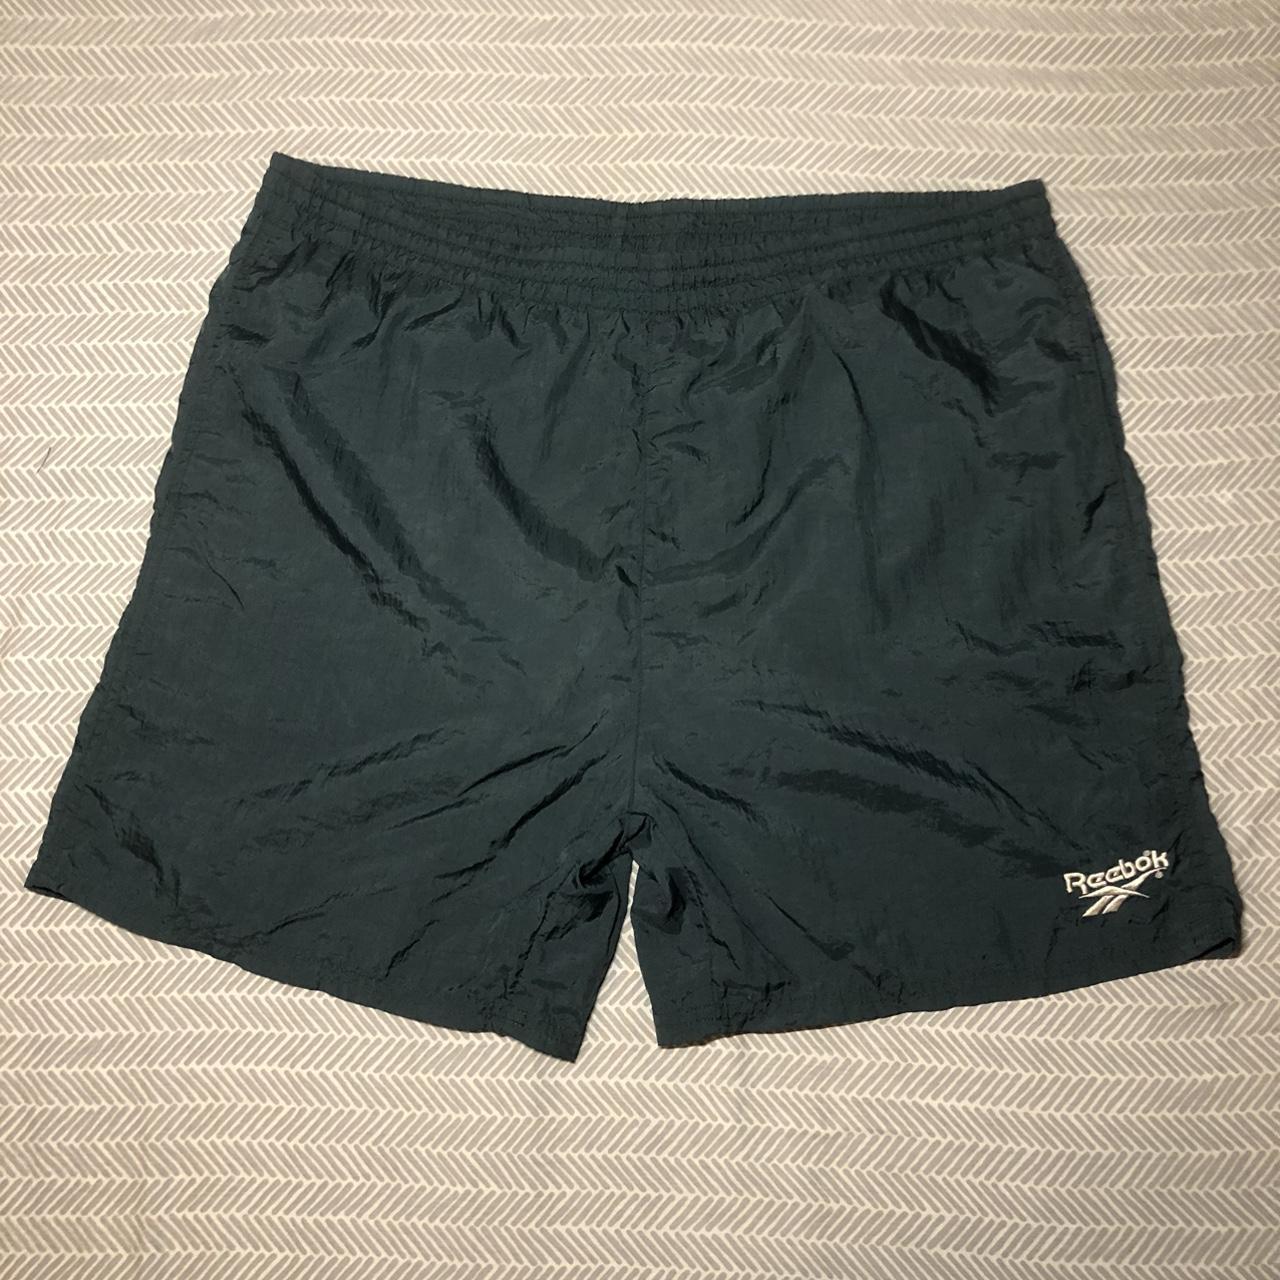 Reebok Men's Green and Khaki Swim-briefs-shorts - 1